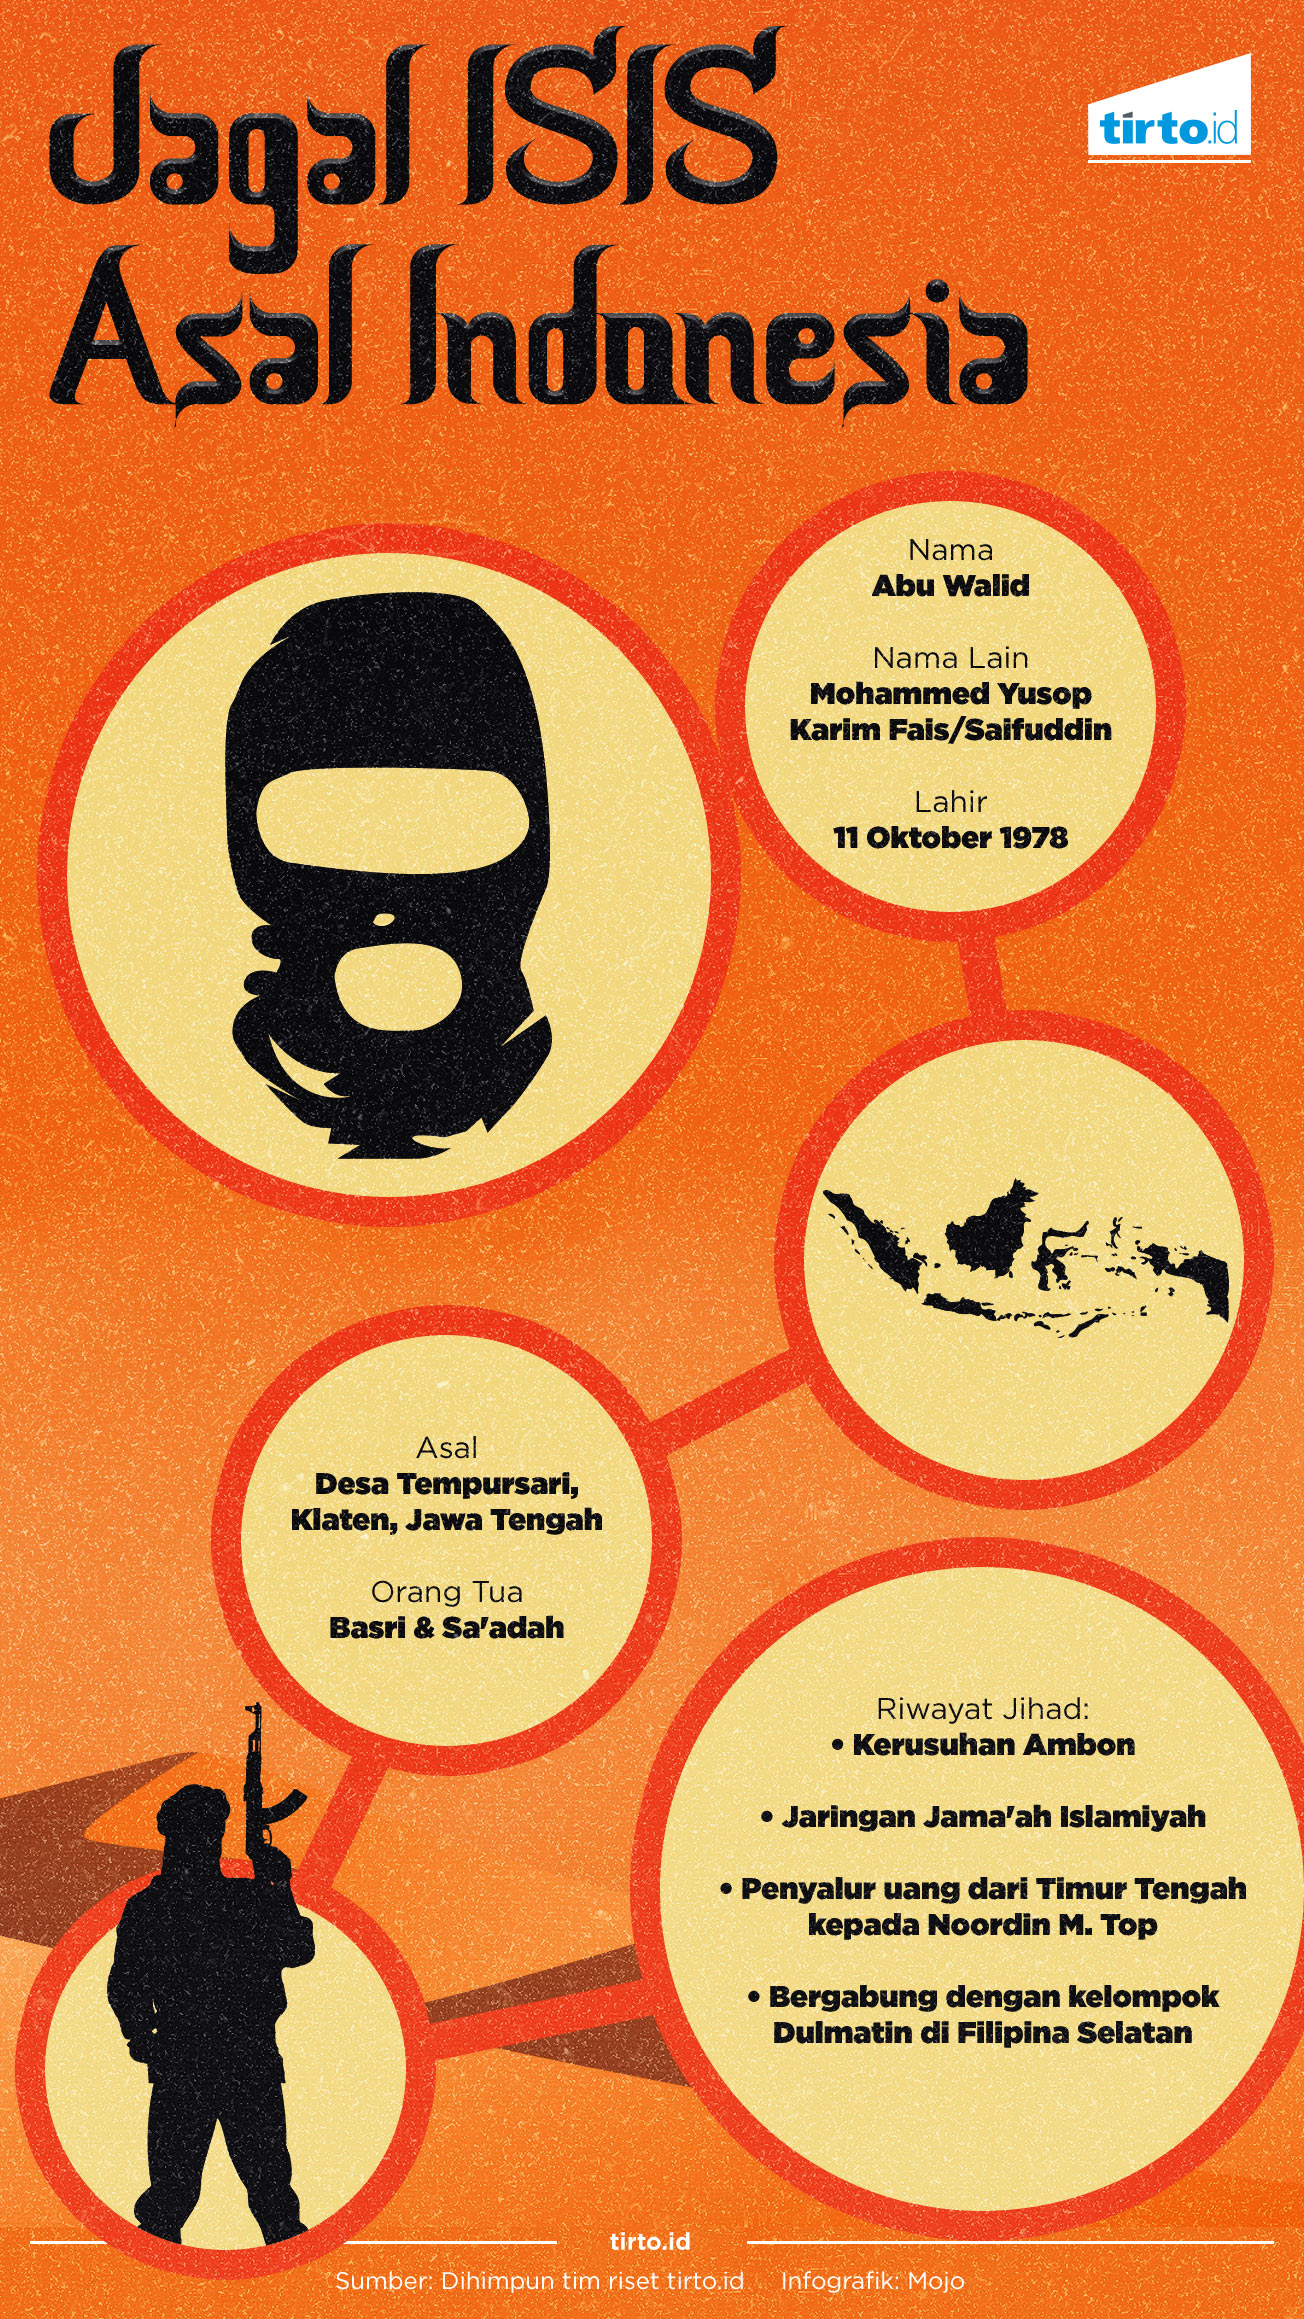 Infografik Jagal ISIS Asal Indonesia